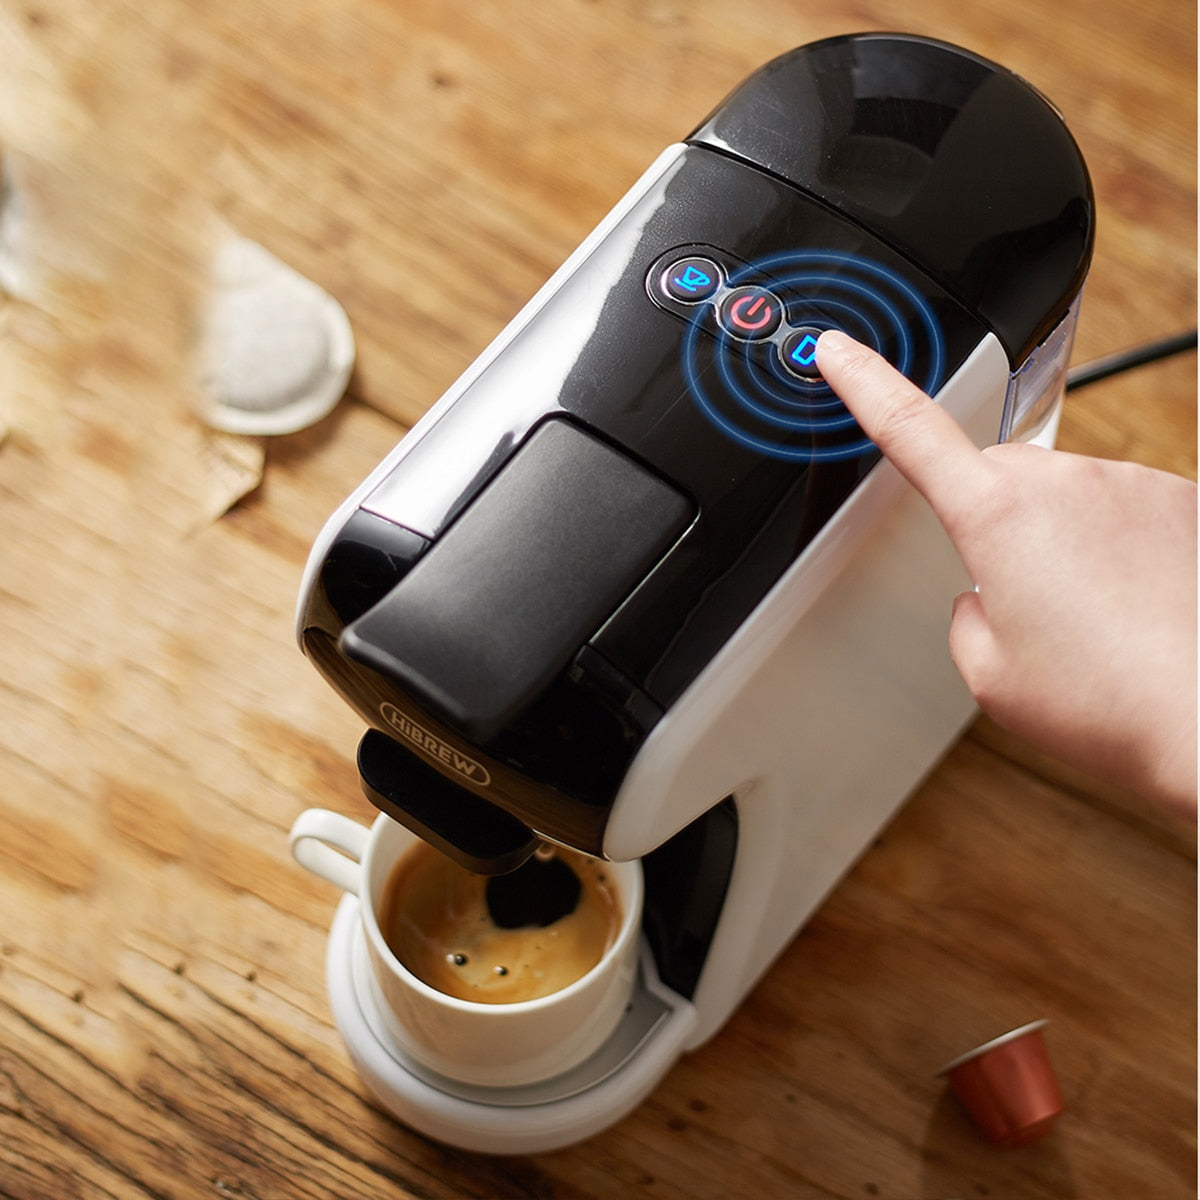 HiBREW 4 in 1 Multiple Capsule Espresso Coffee Machine 